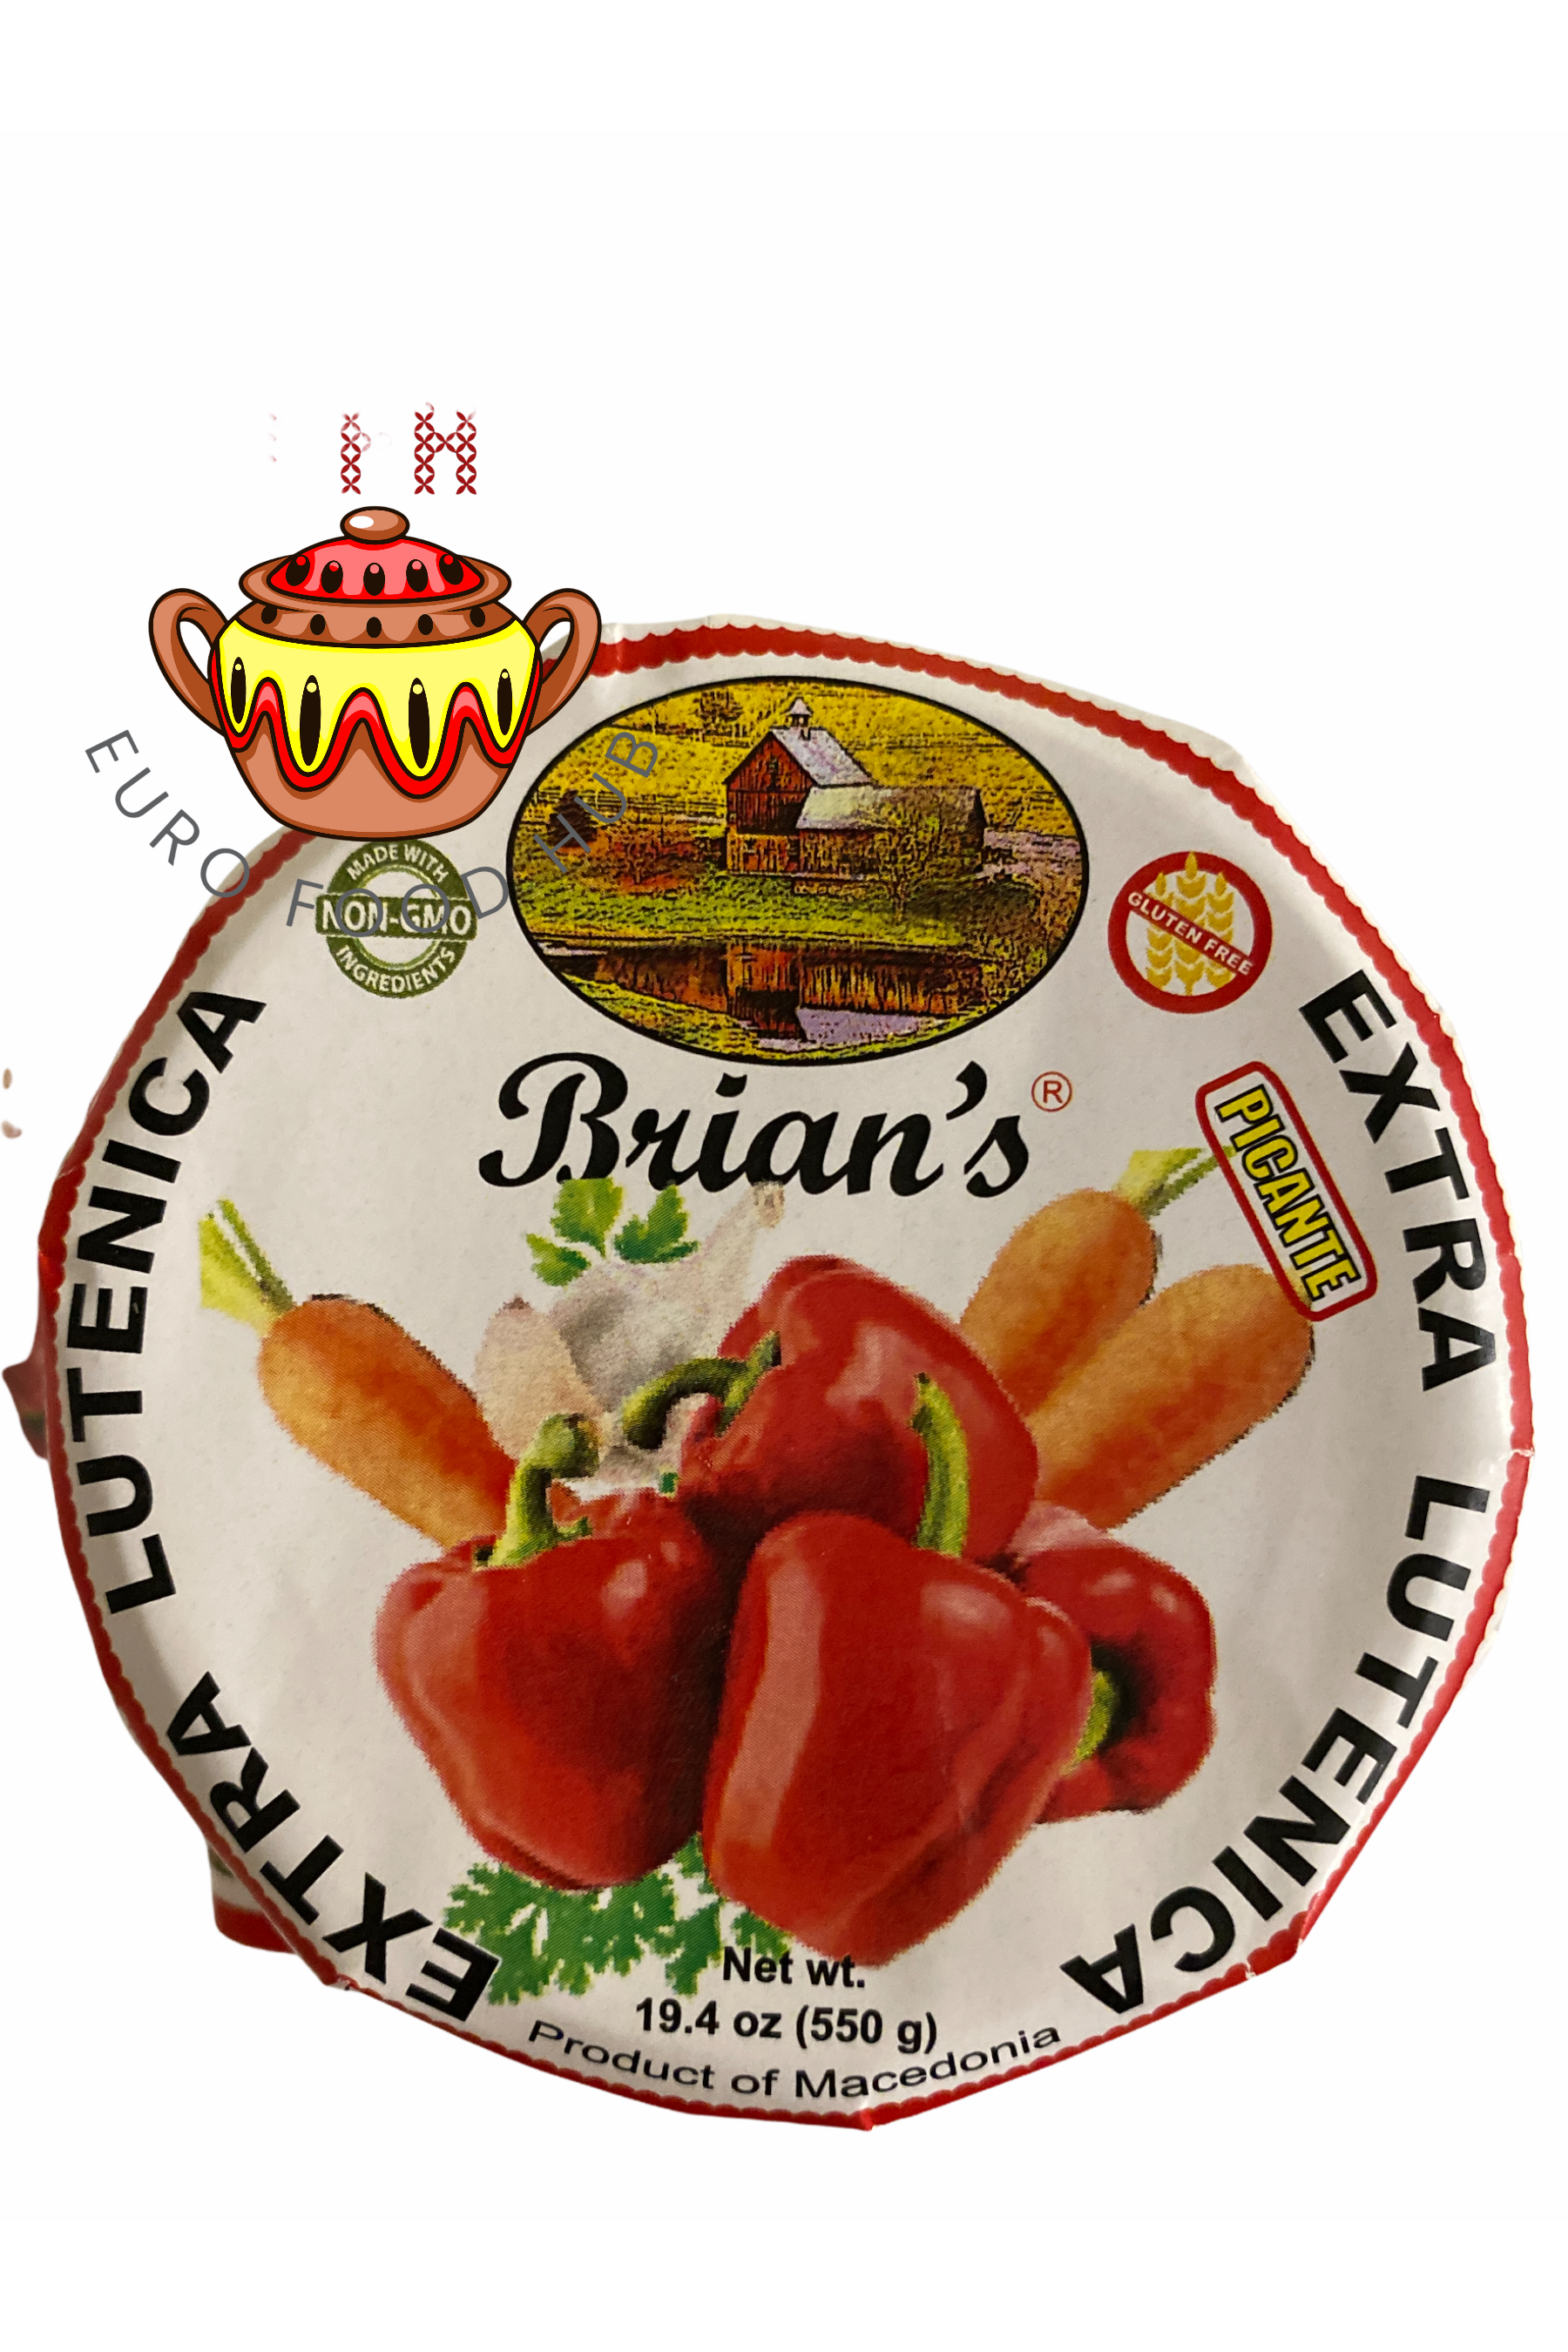 Brian's Extra Lutenica Picant